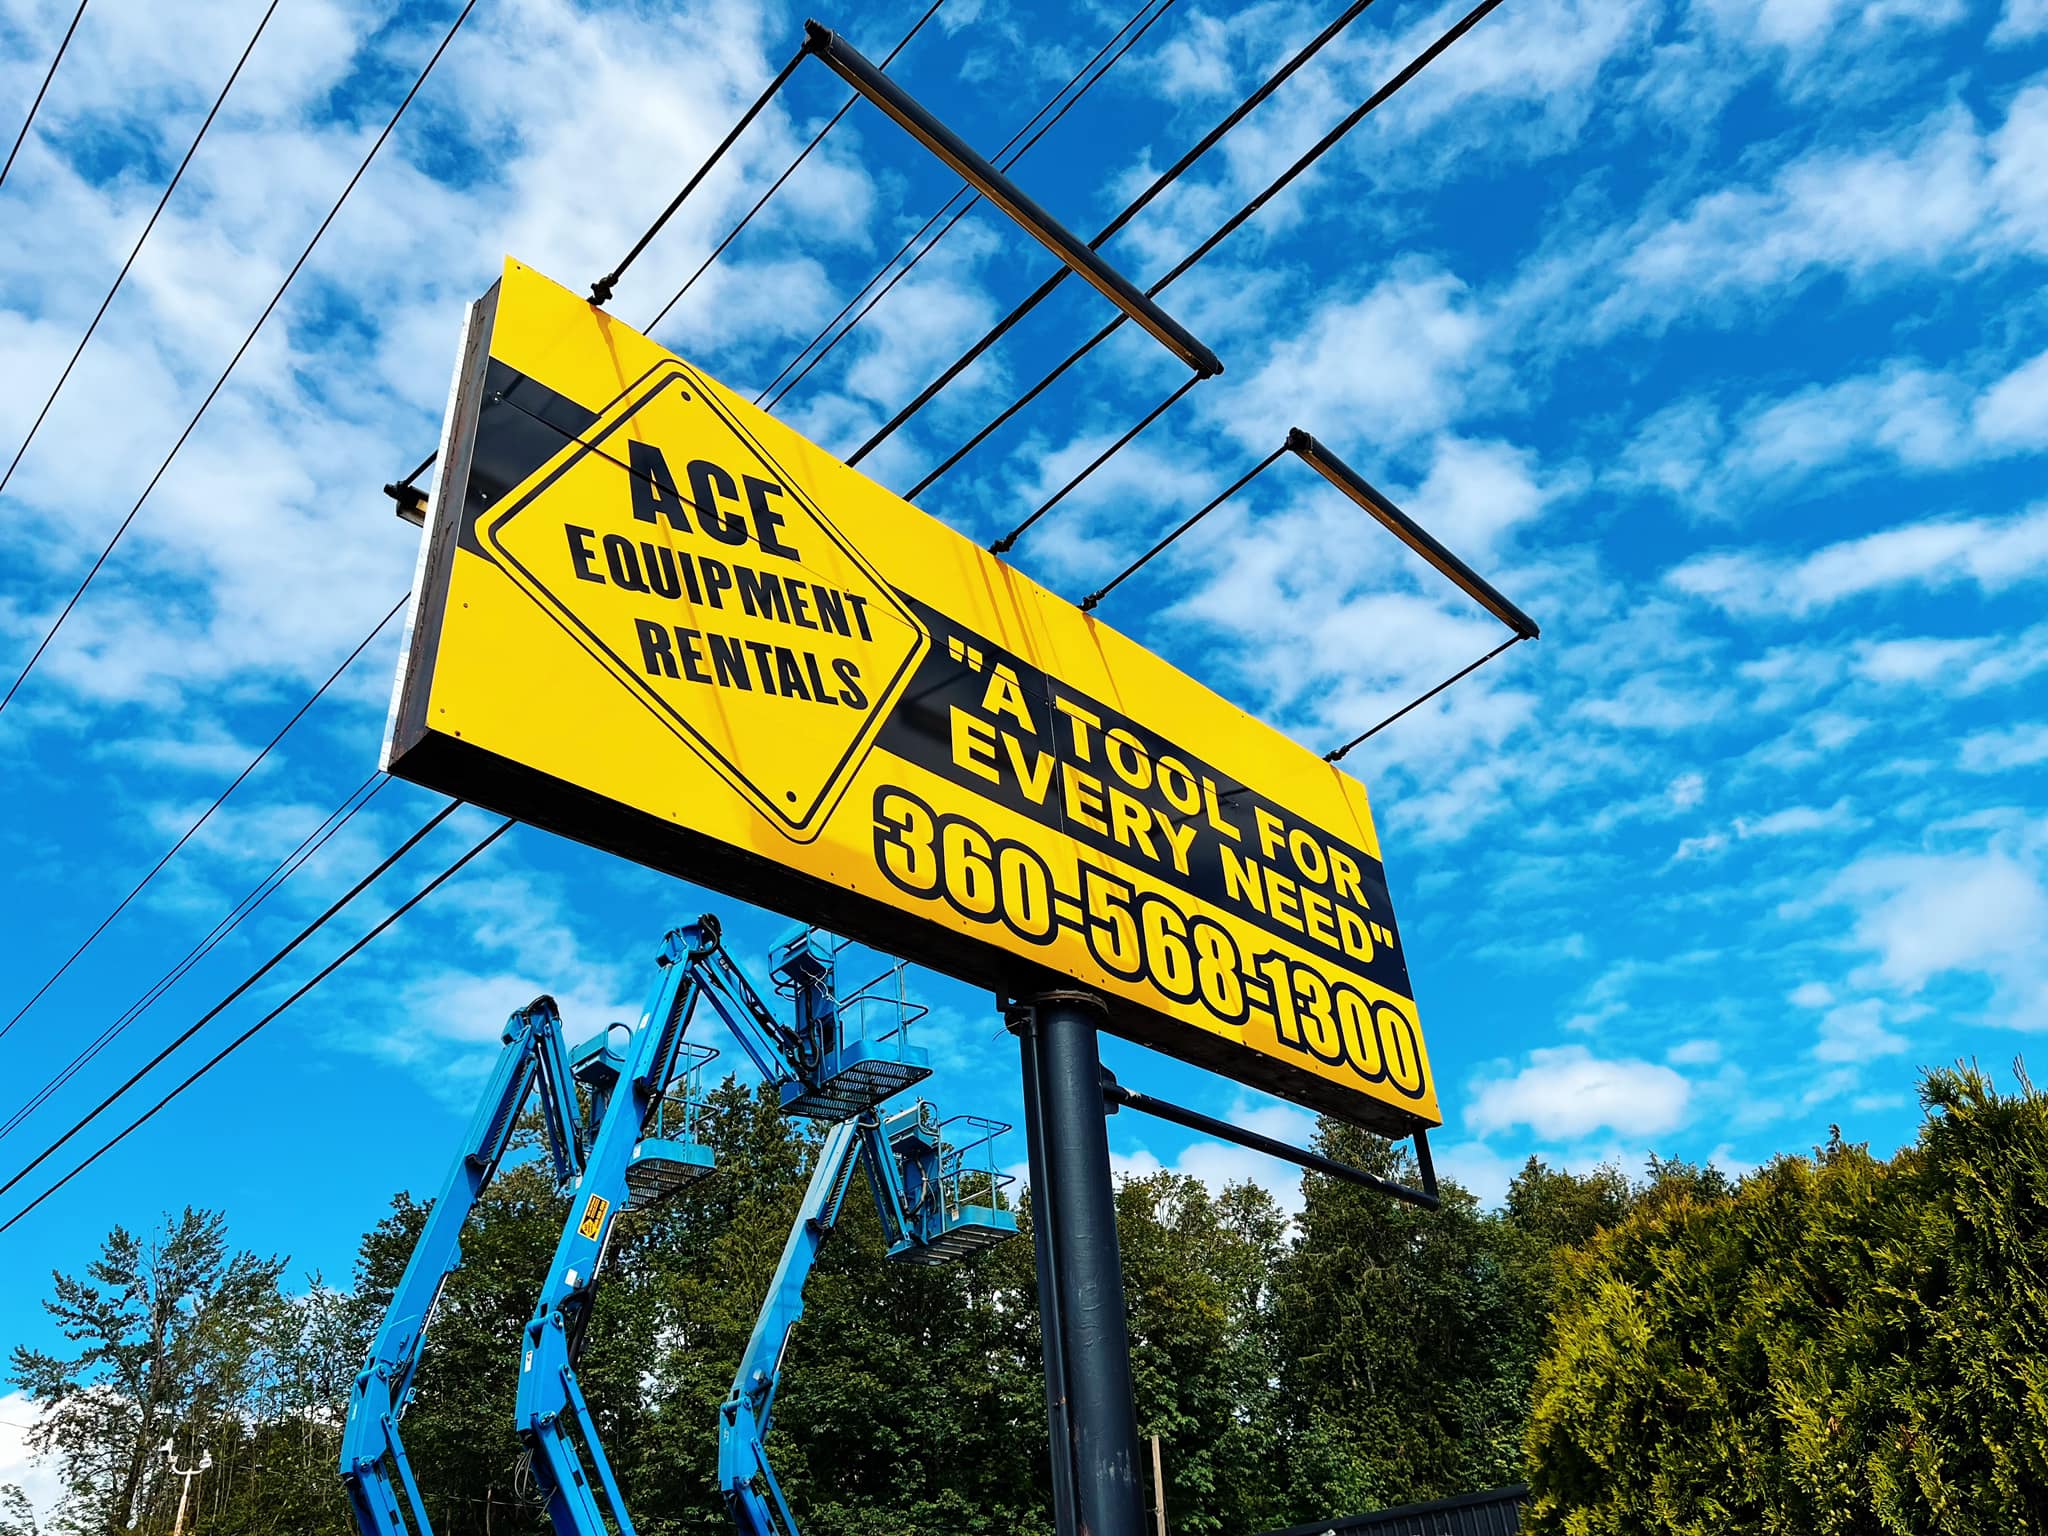 ace equipment rentals billboard